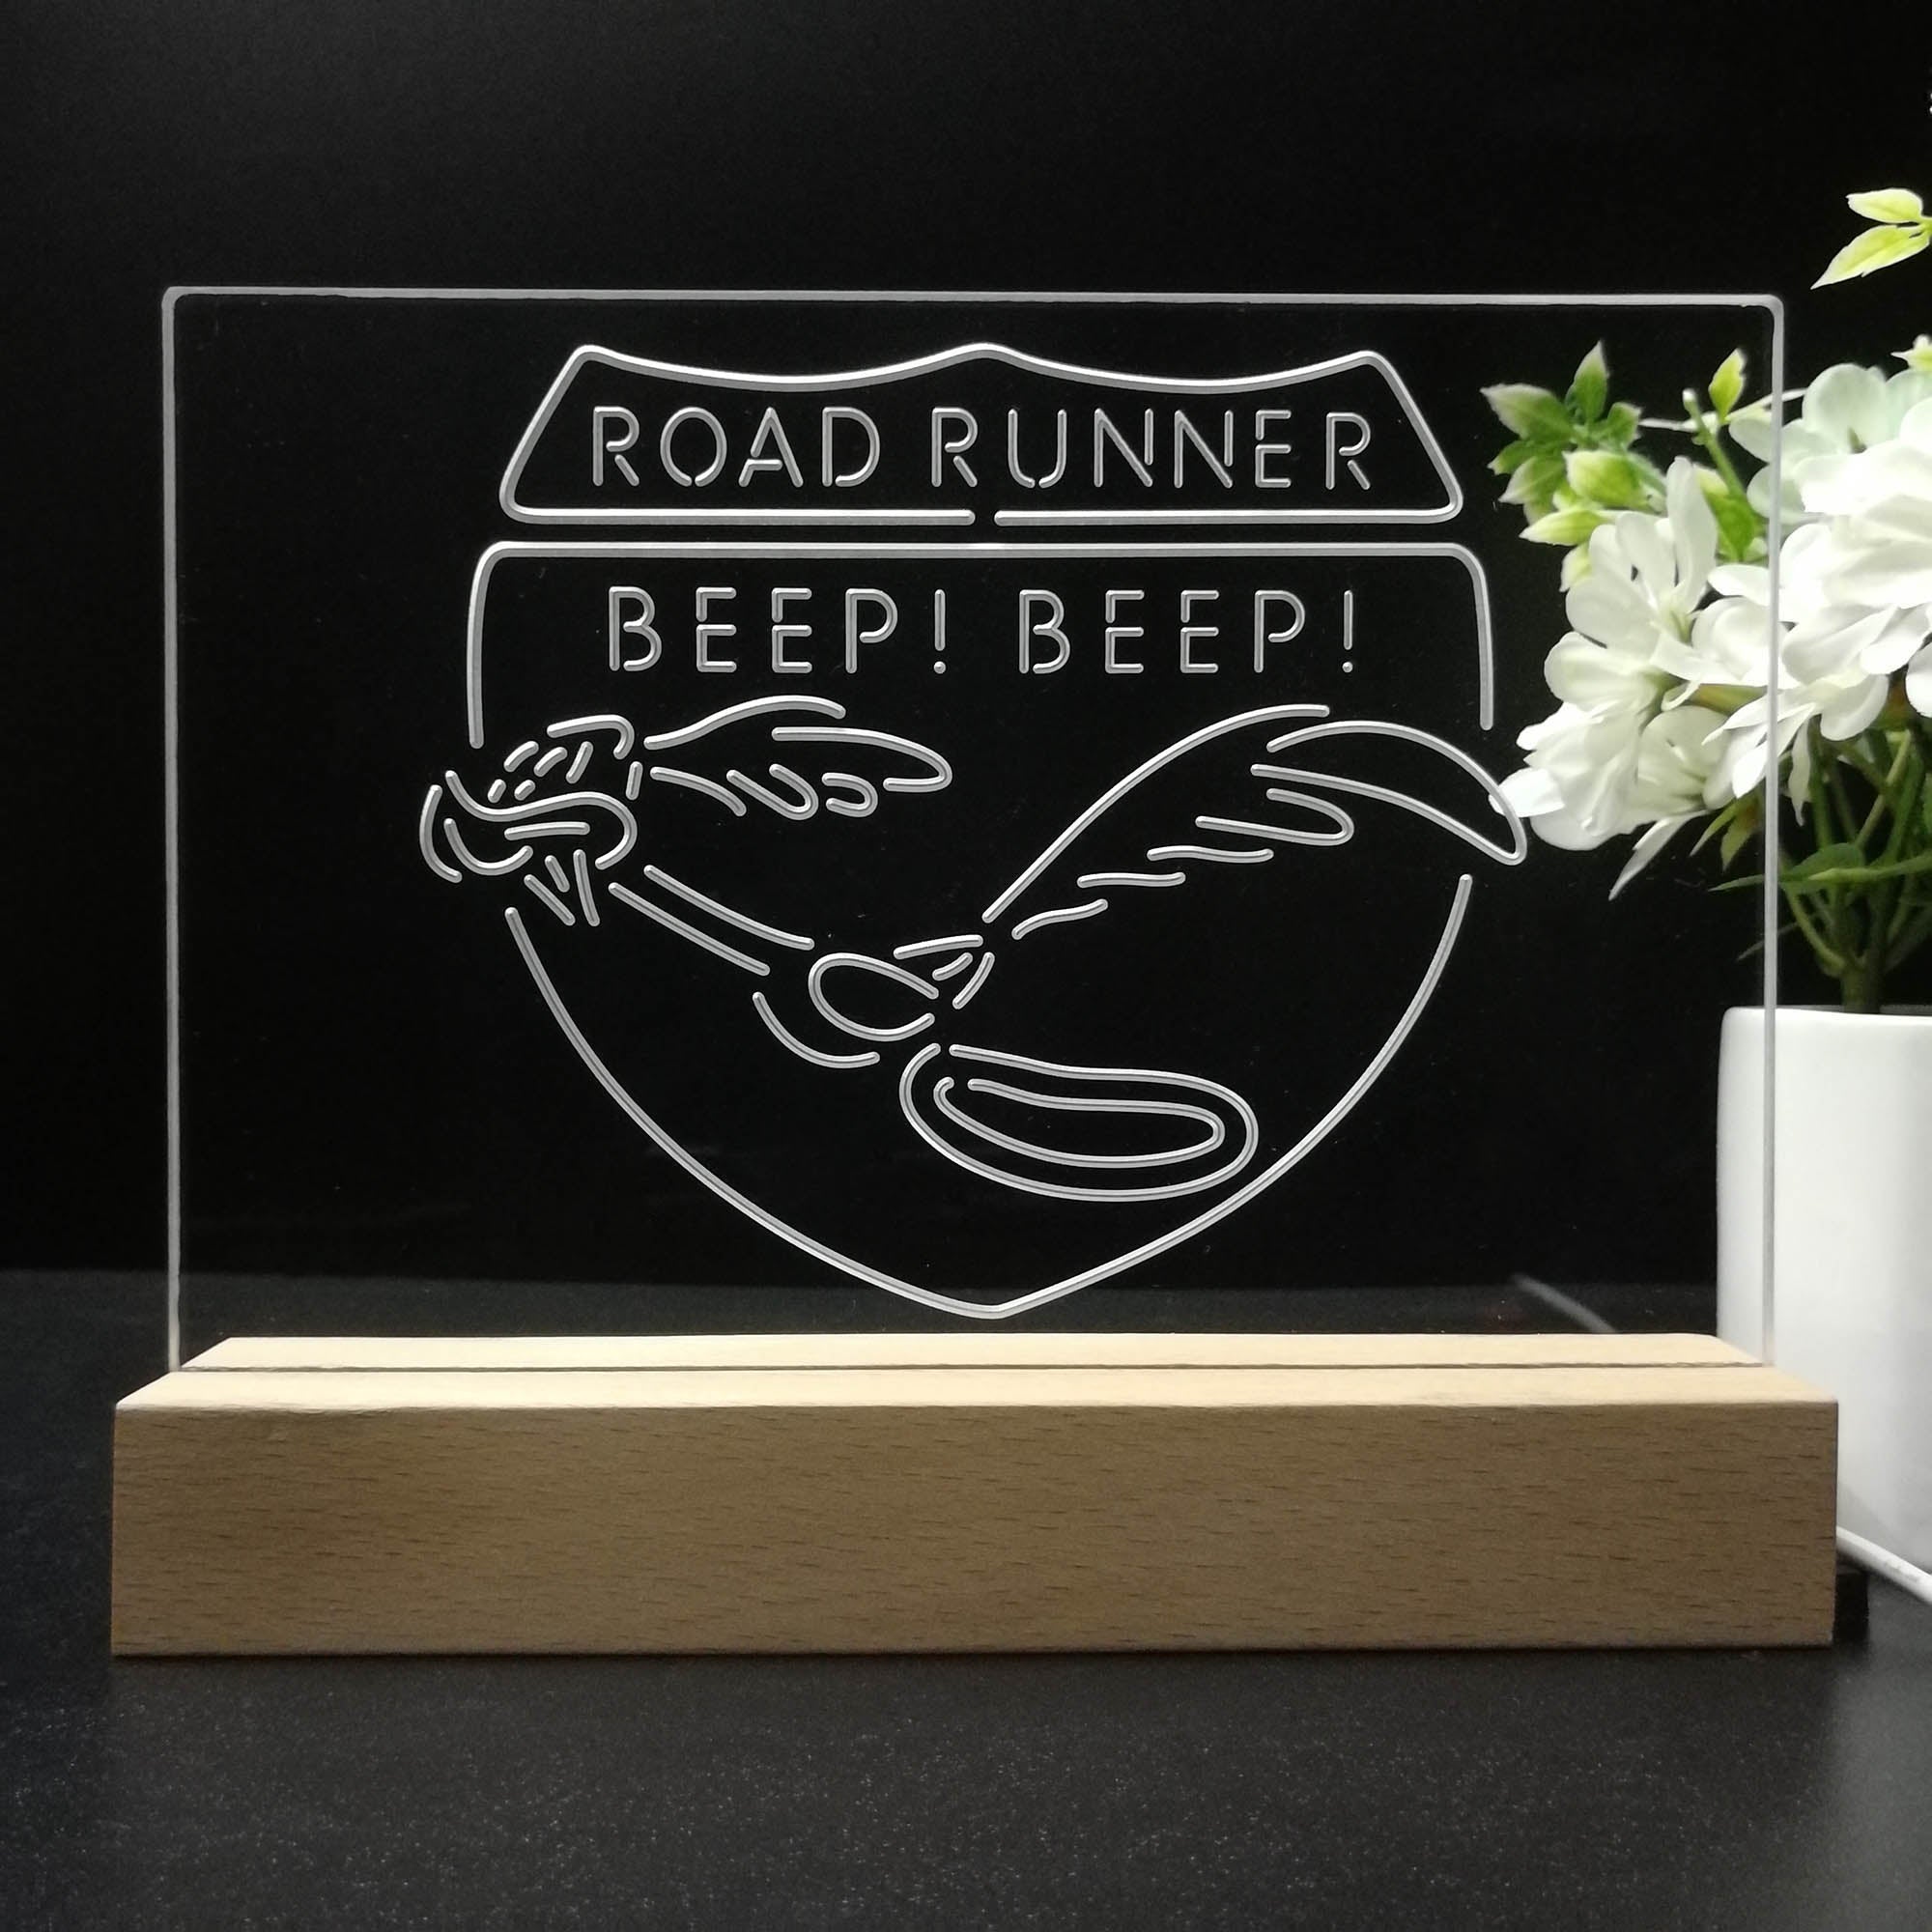 Road Runner Beep Beep 3D Illusion Night Light Desk Lamp